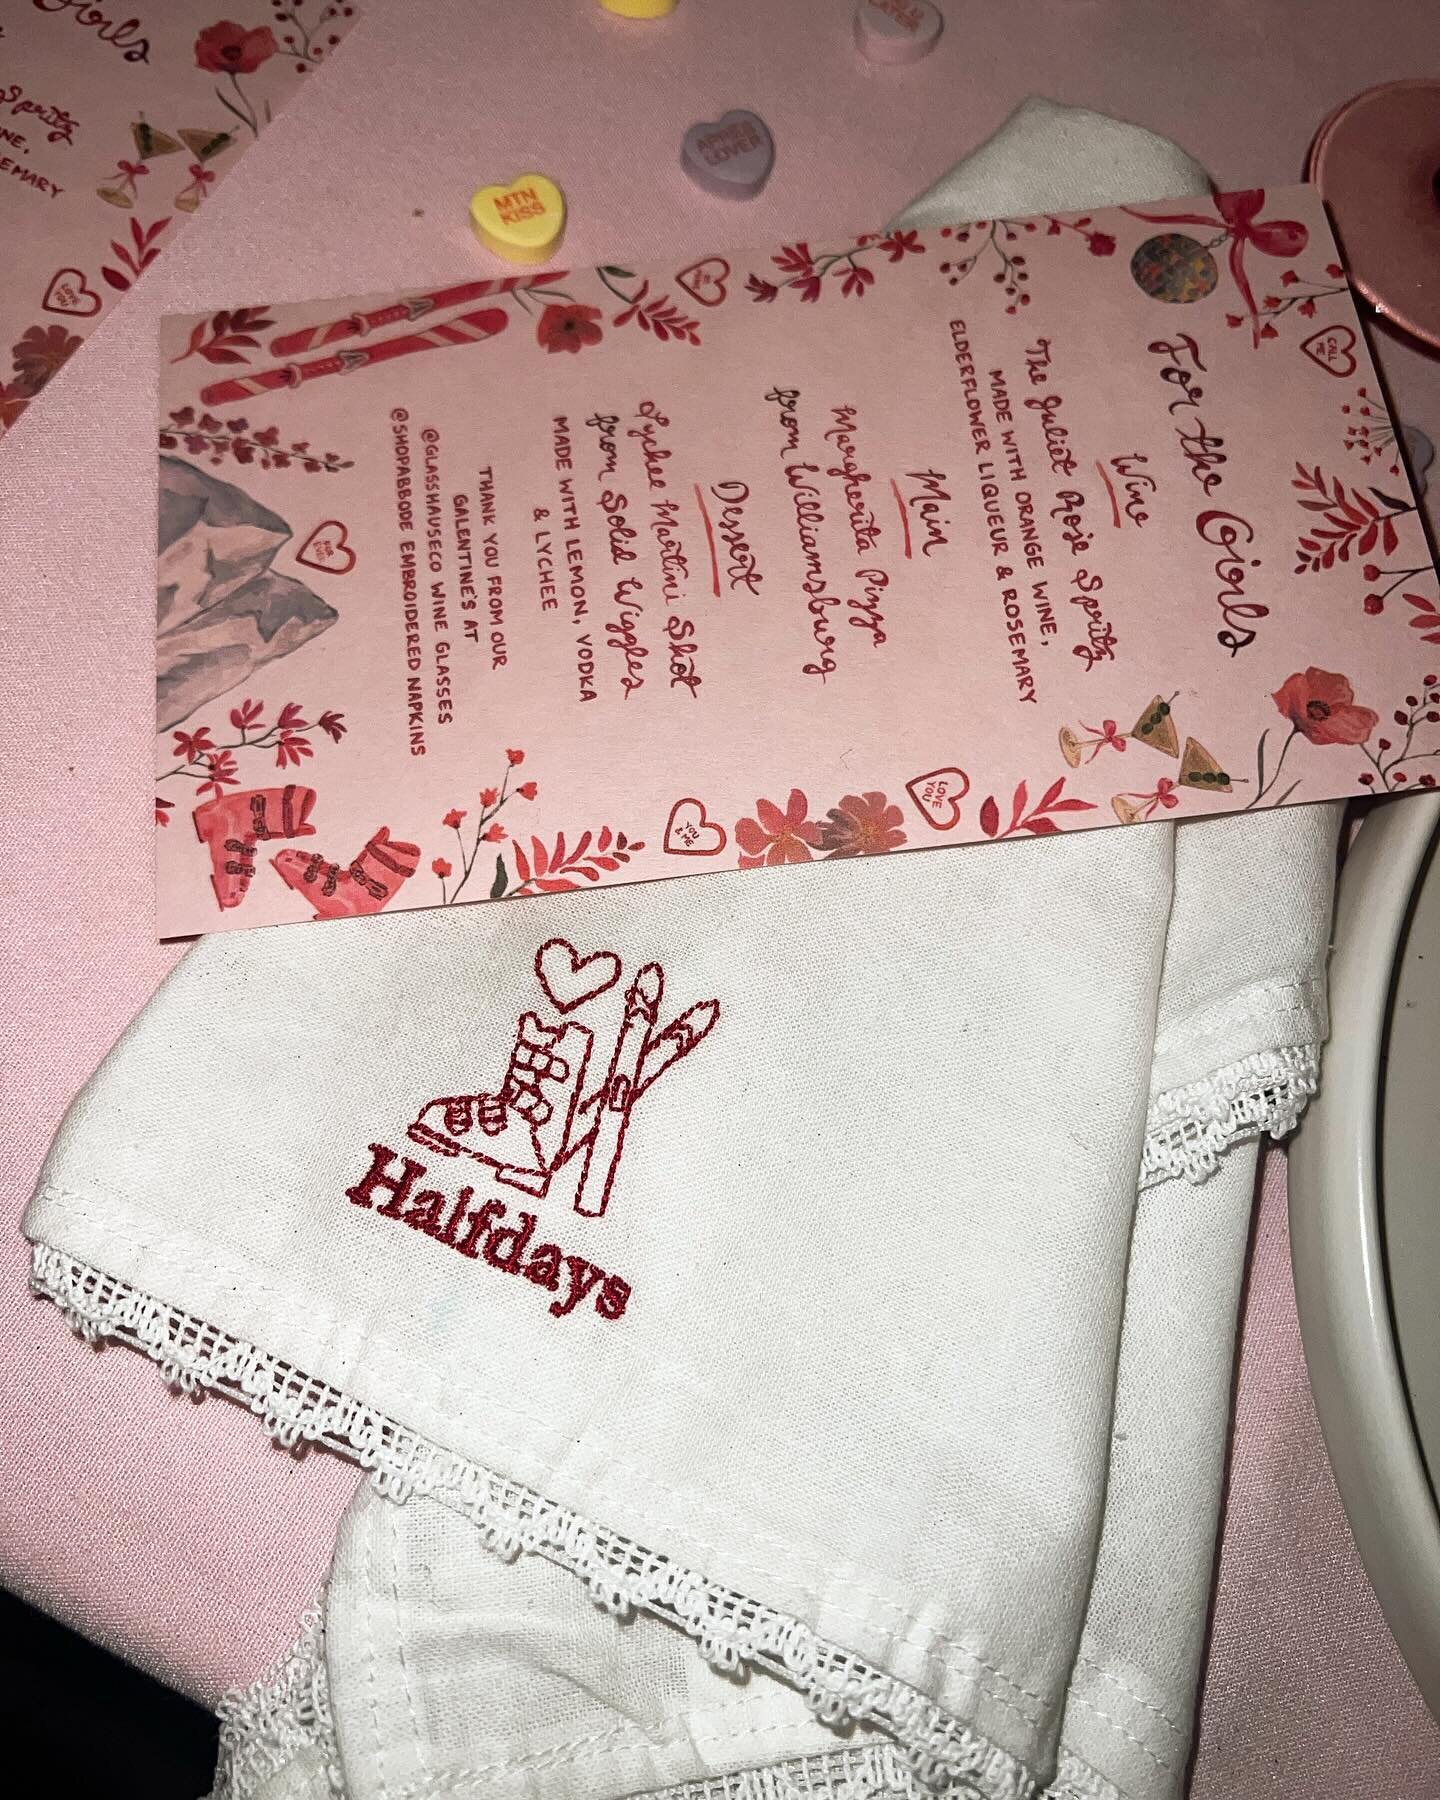 Dinner for the girls ~ menu &amp; place cards for @halfdays Galentines dinner 🎀🗻❣️🪩 #valentines #galentinesday #skiislife #eventdesign #watercolorillustration #illustratedmenu #watercolor #placesetting #thelandofla